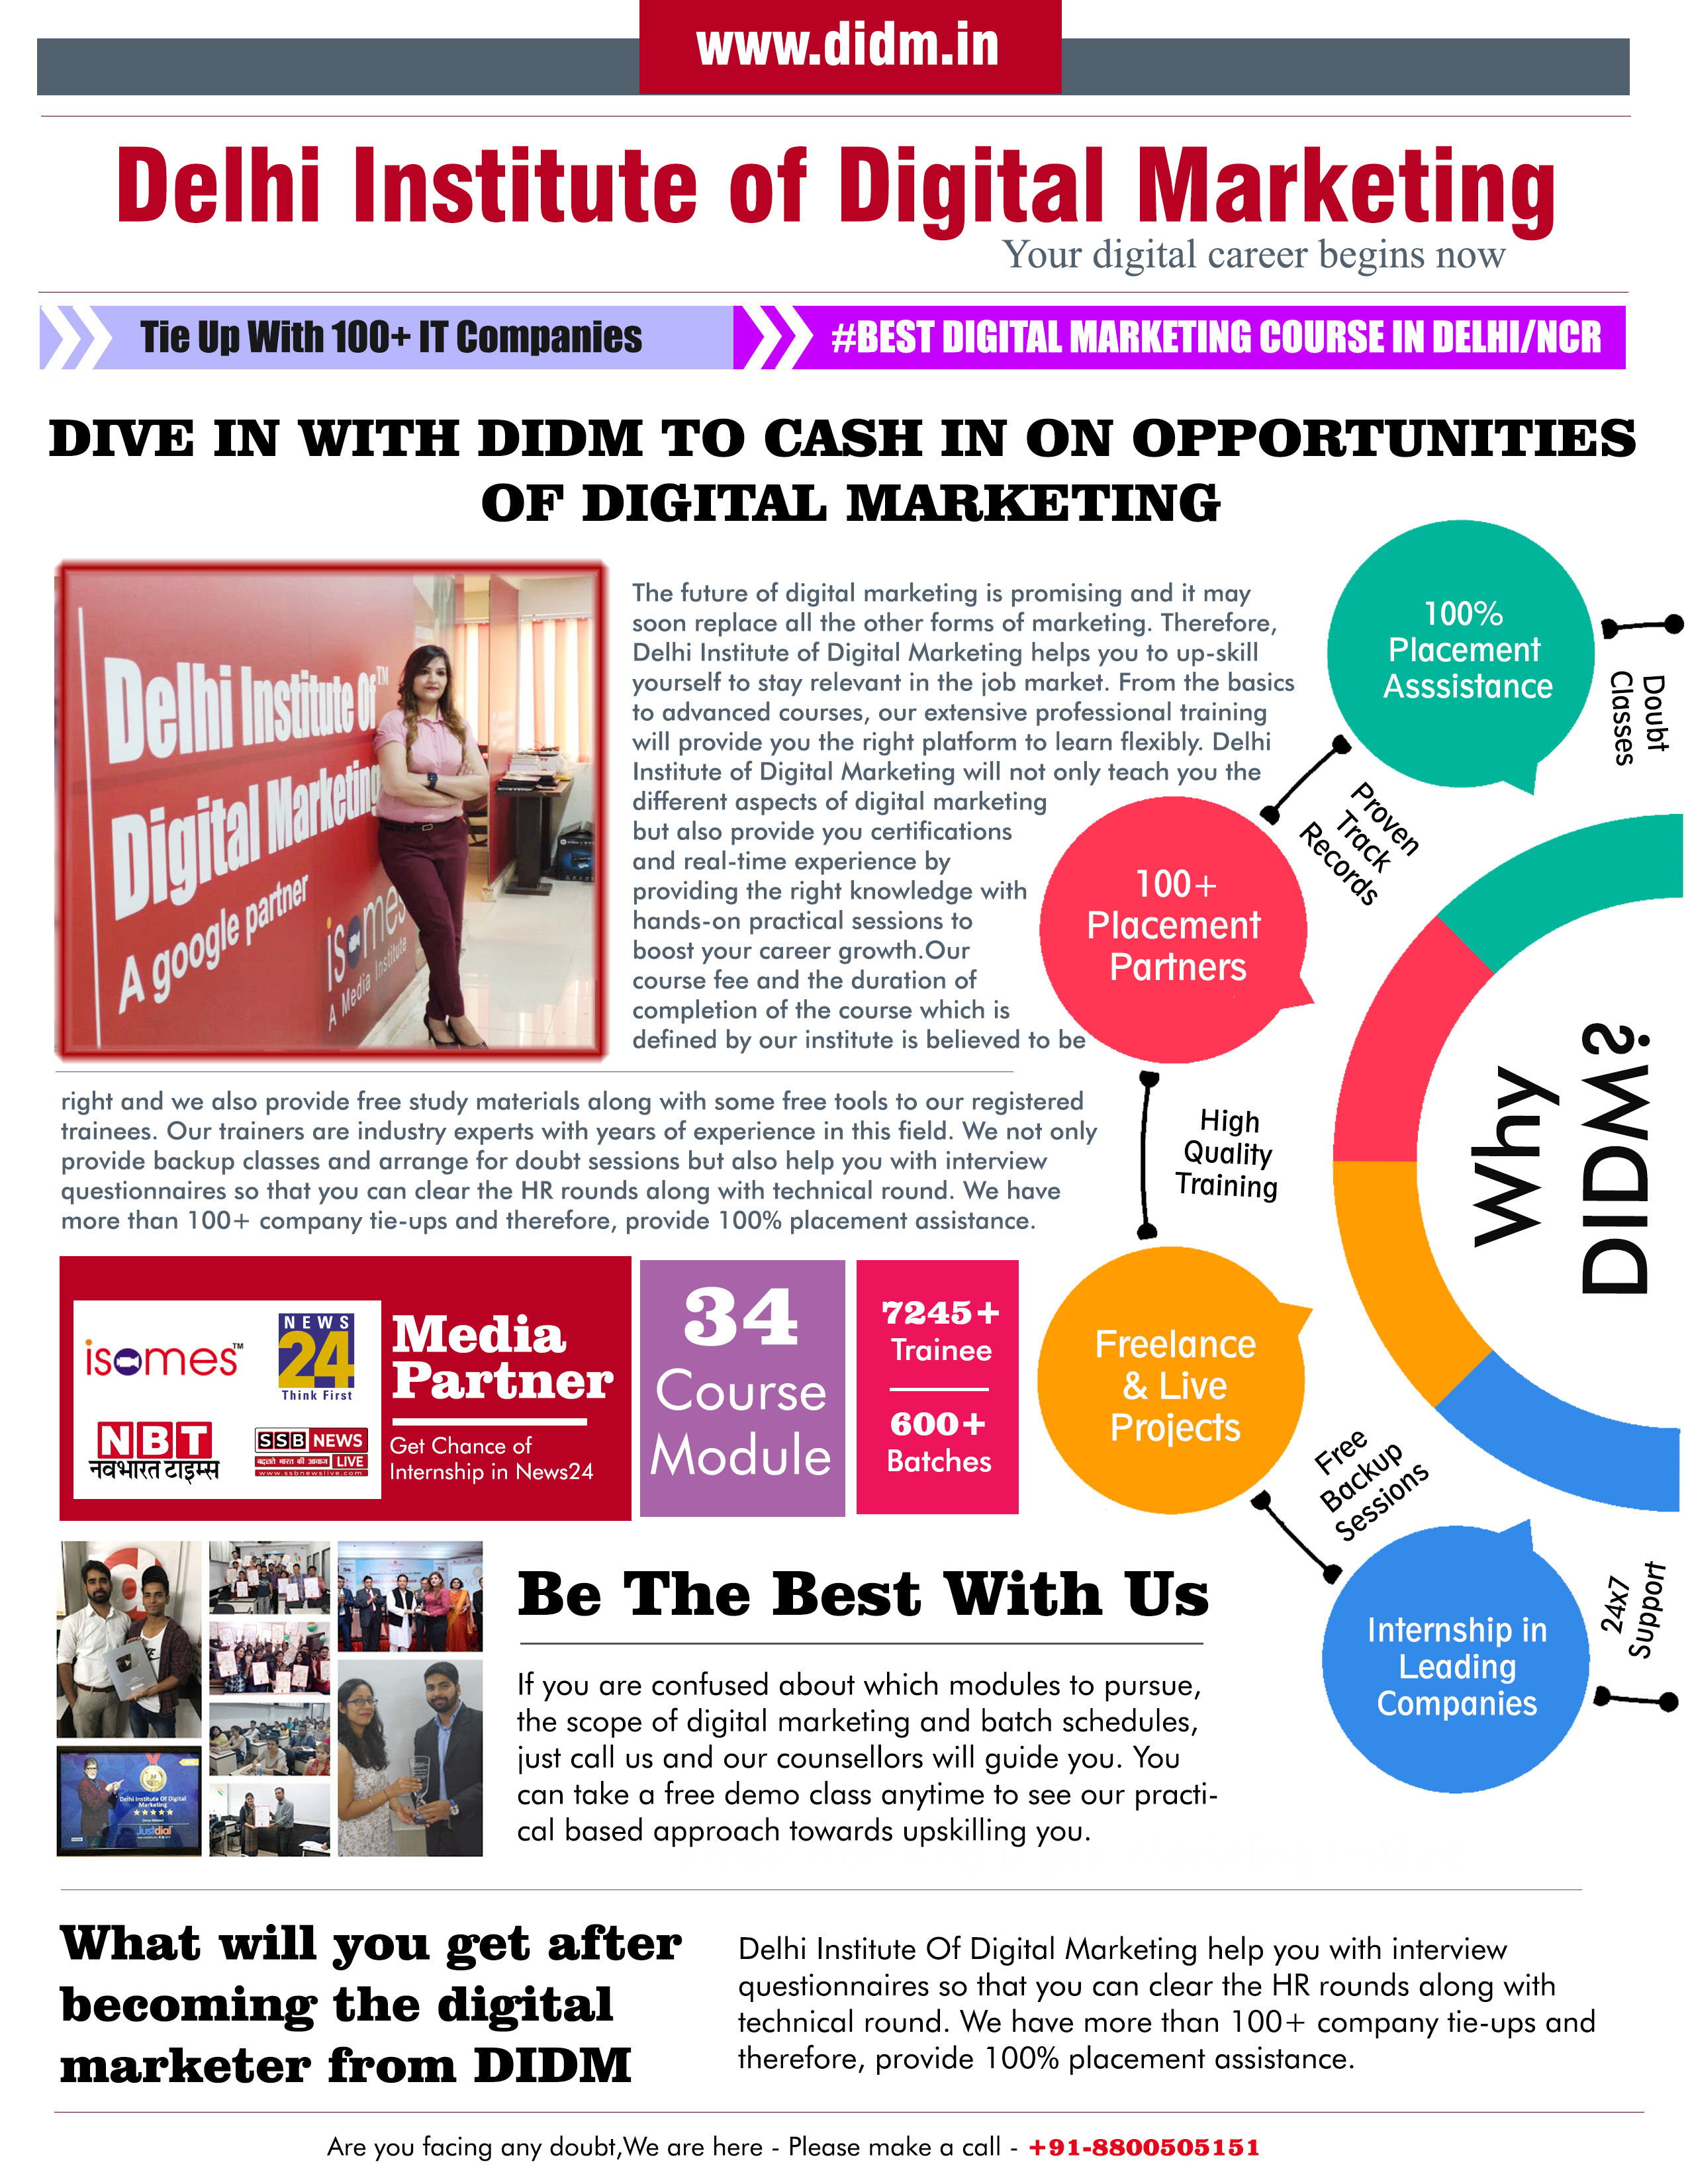 India's 1st HYBRID Master Program in Digital Marketing